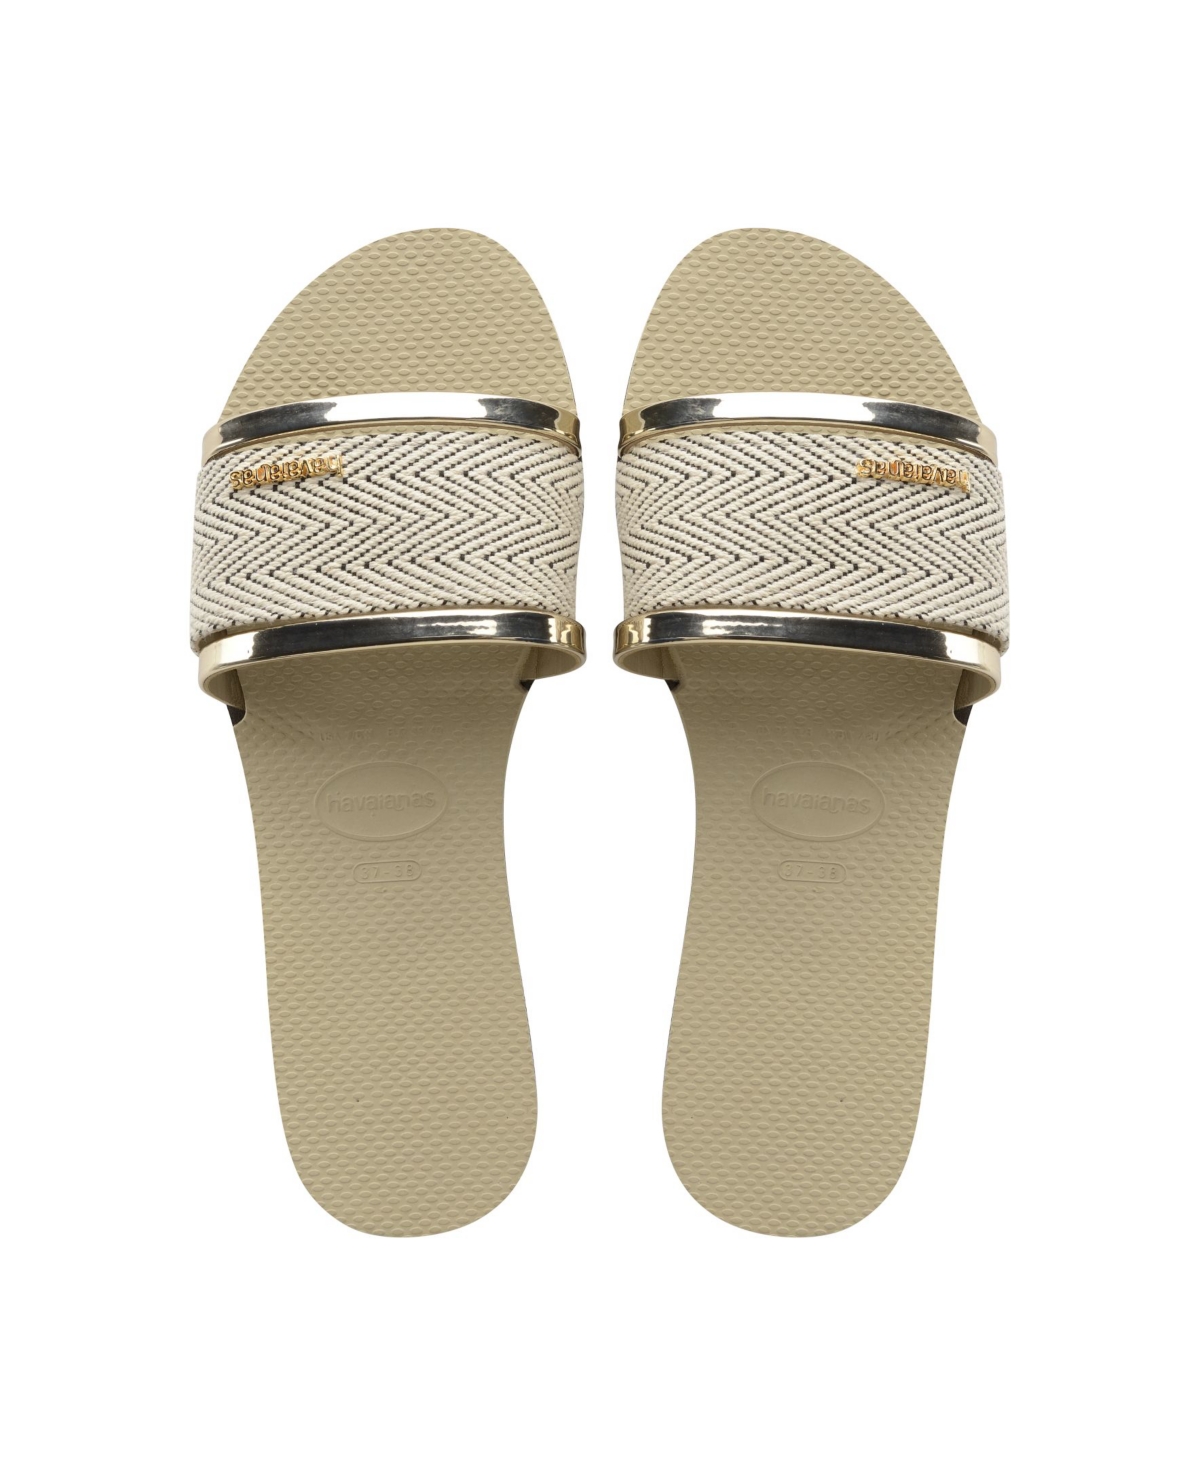 Women's You Trancoso Premium Flip Flop Sandals - Steel Gray